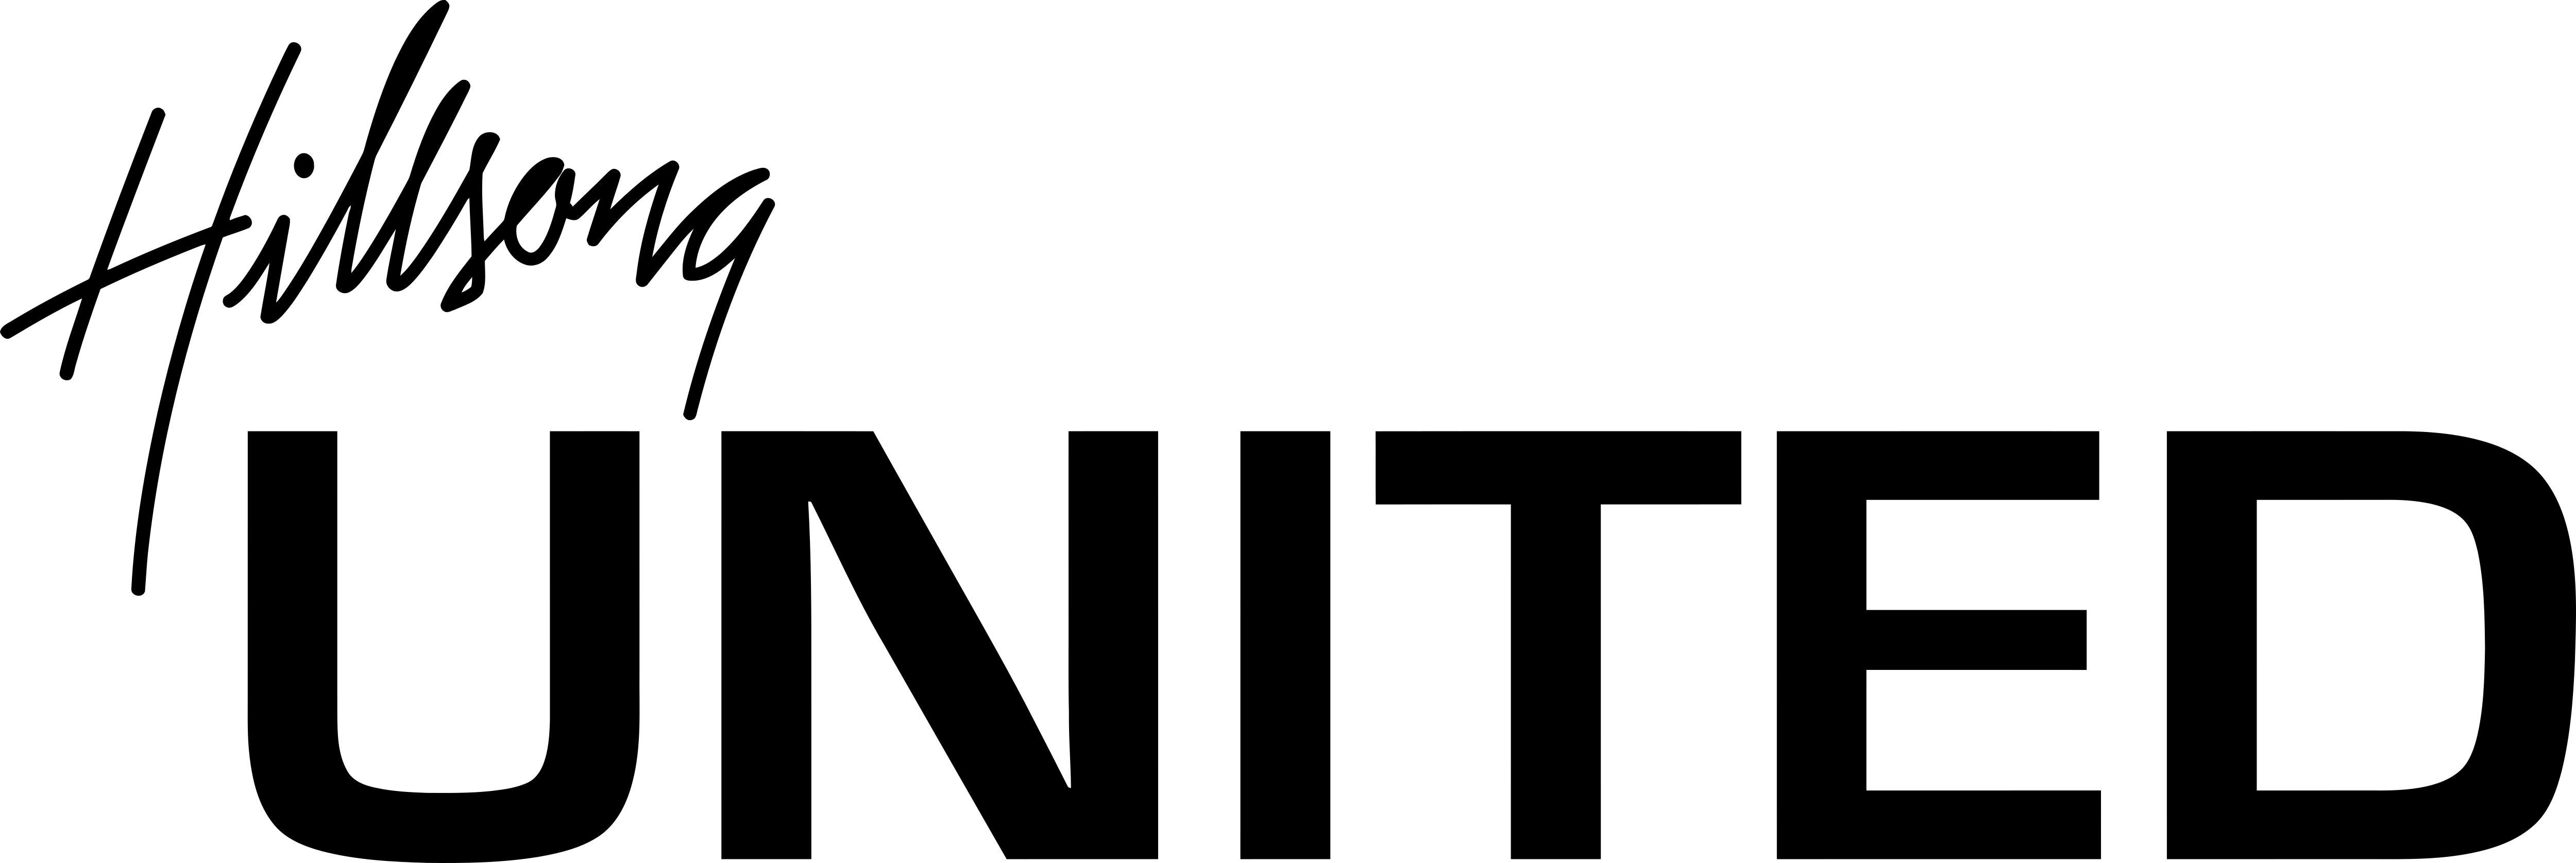 hillsong united logo png